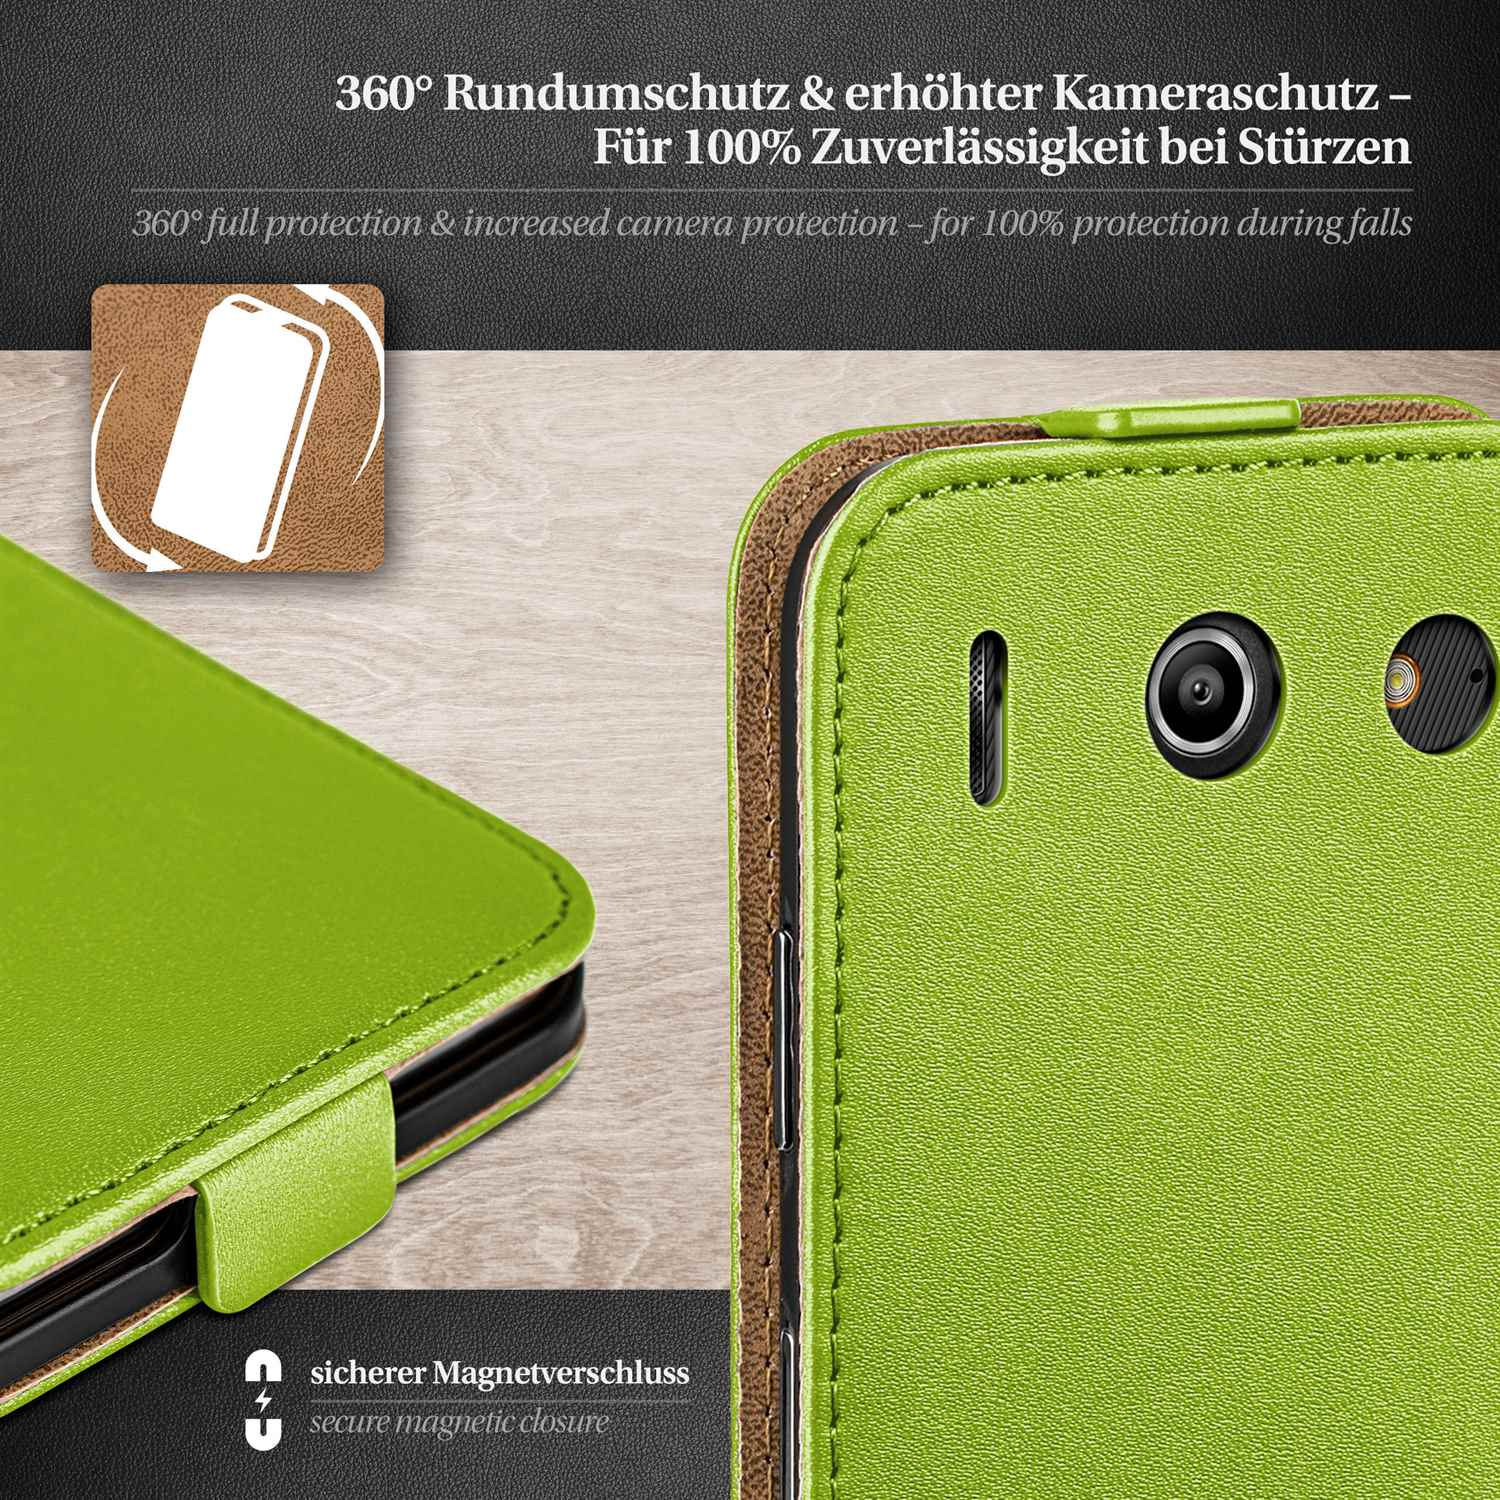 Flip Flip G510, Ascend Case, Huawei, Cover, Lime-Green MOEX